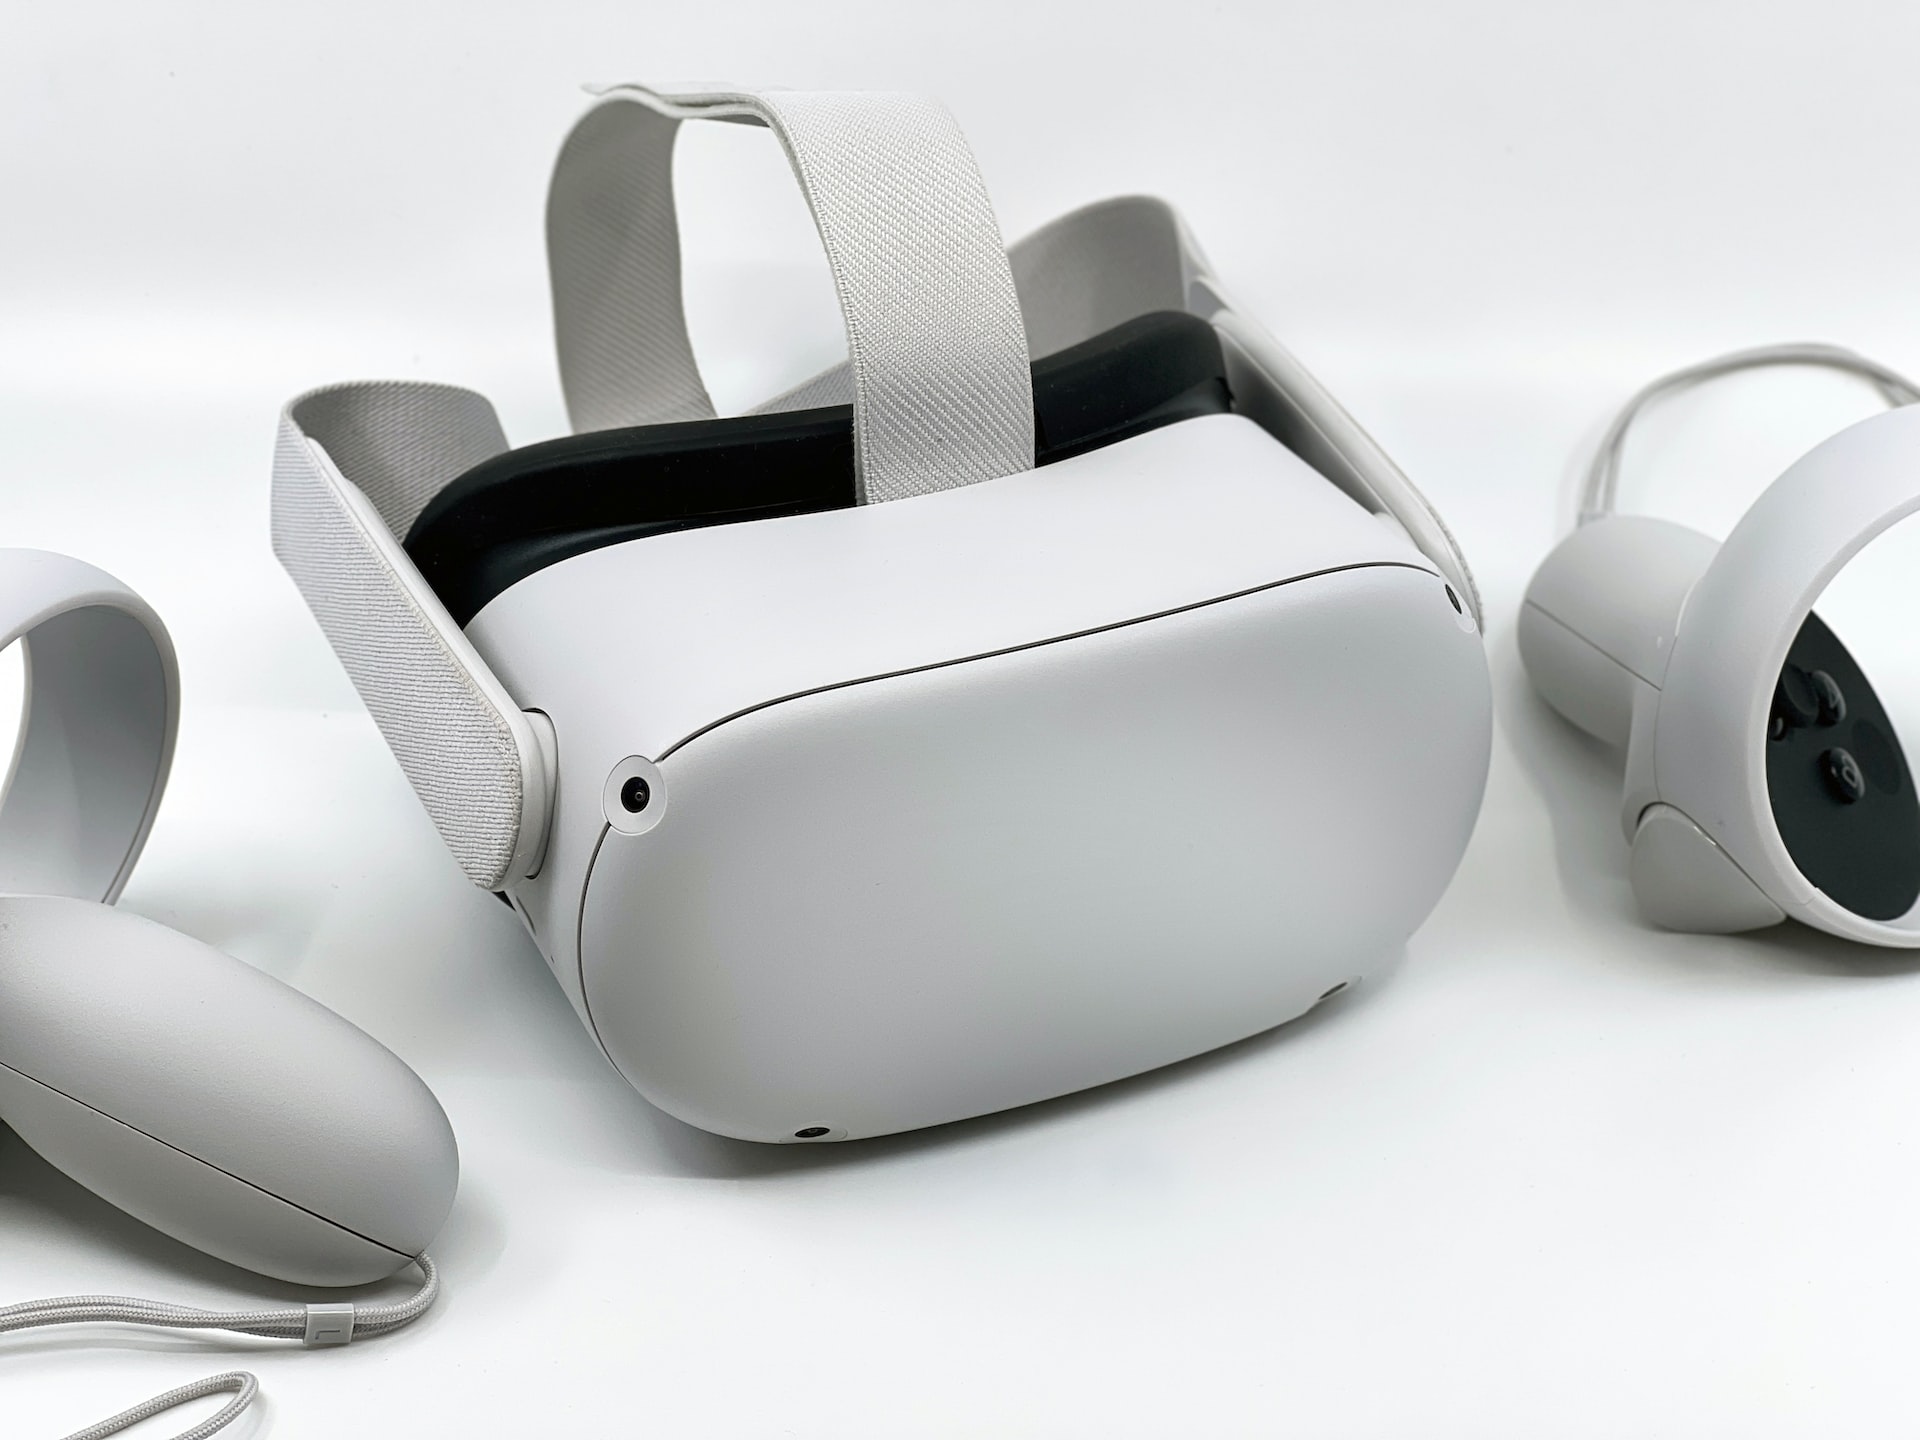 Meta unveils a $1,500 VR headset